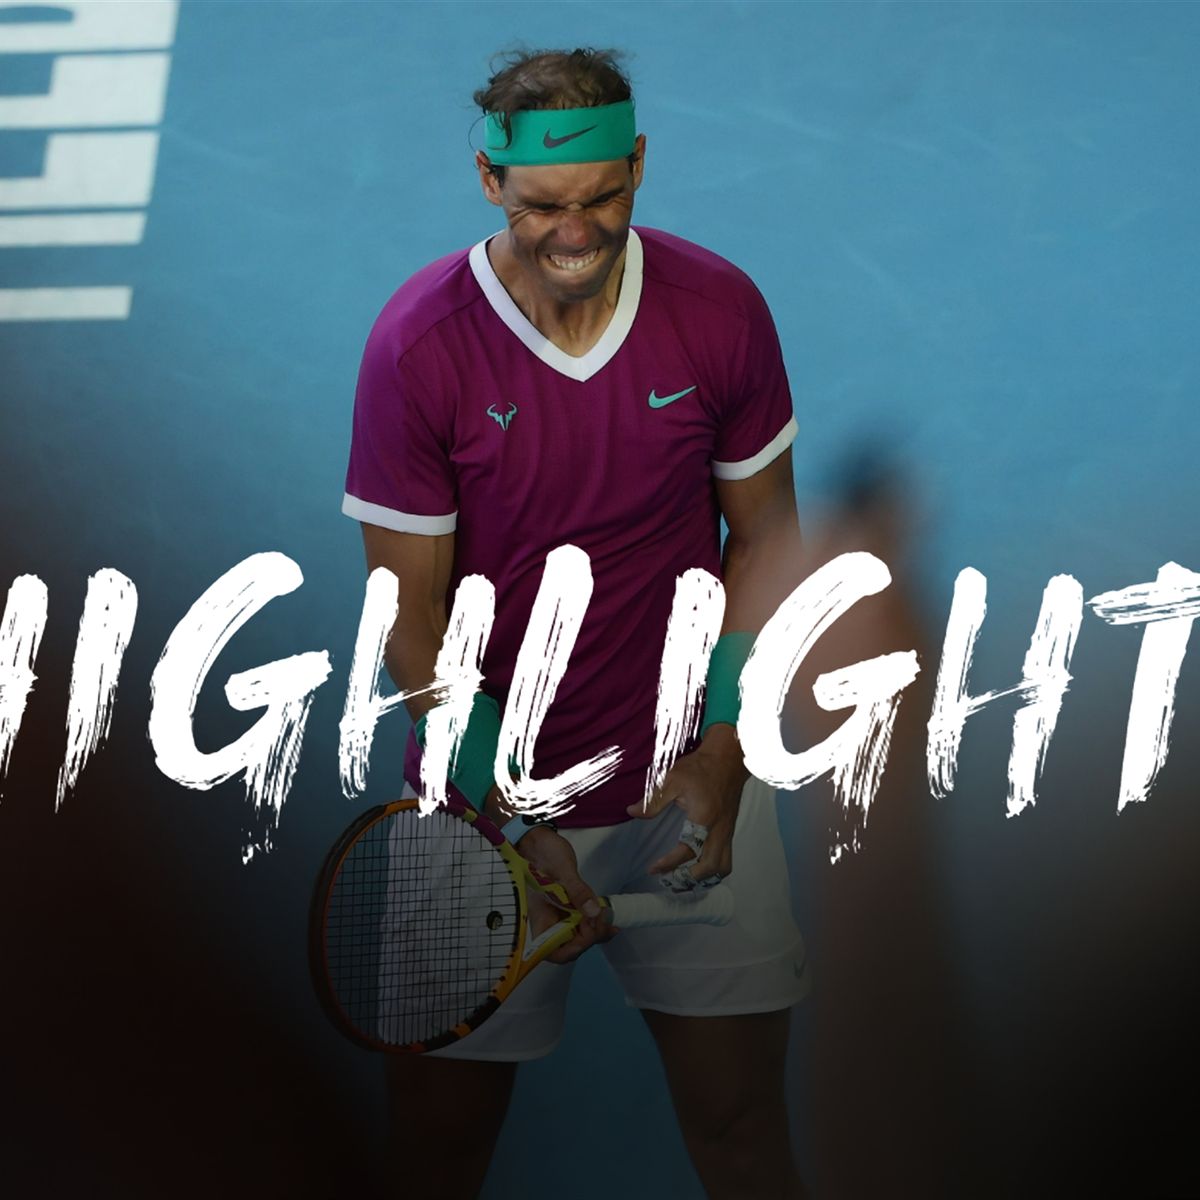 Australian Open 2022 Rafael Nadal - Denis Shapovalov Highlights - Viertelfinale Herren-Einzel - Tennis Video